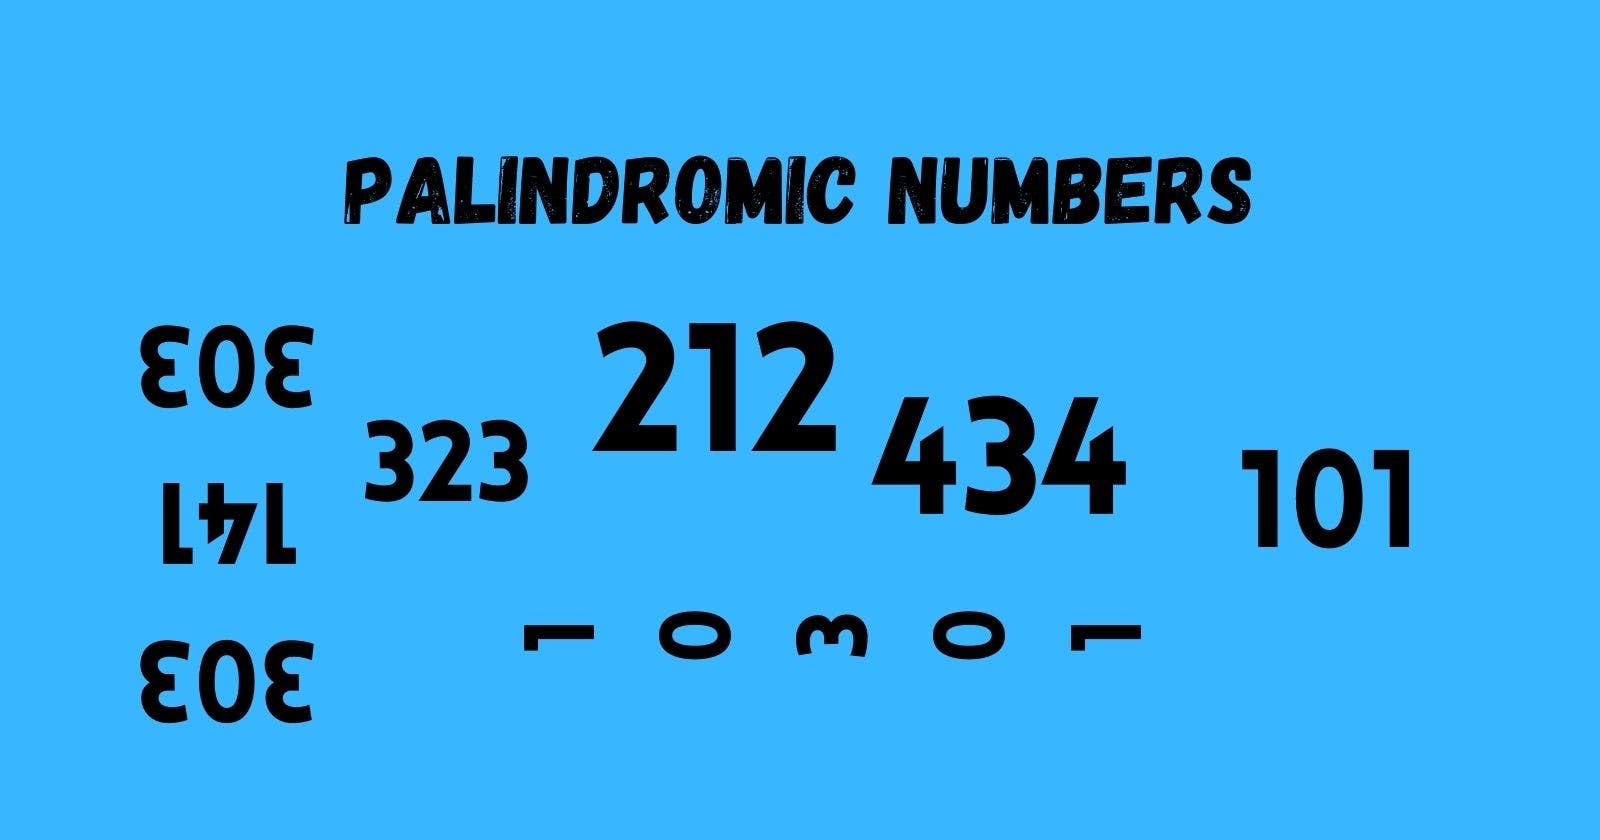 Finding Palindromes Using Python